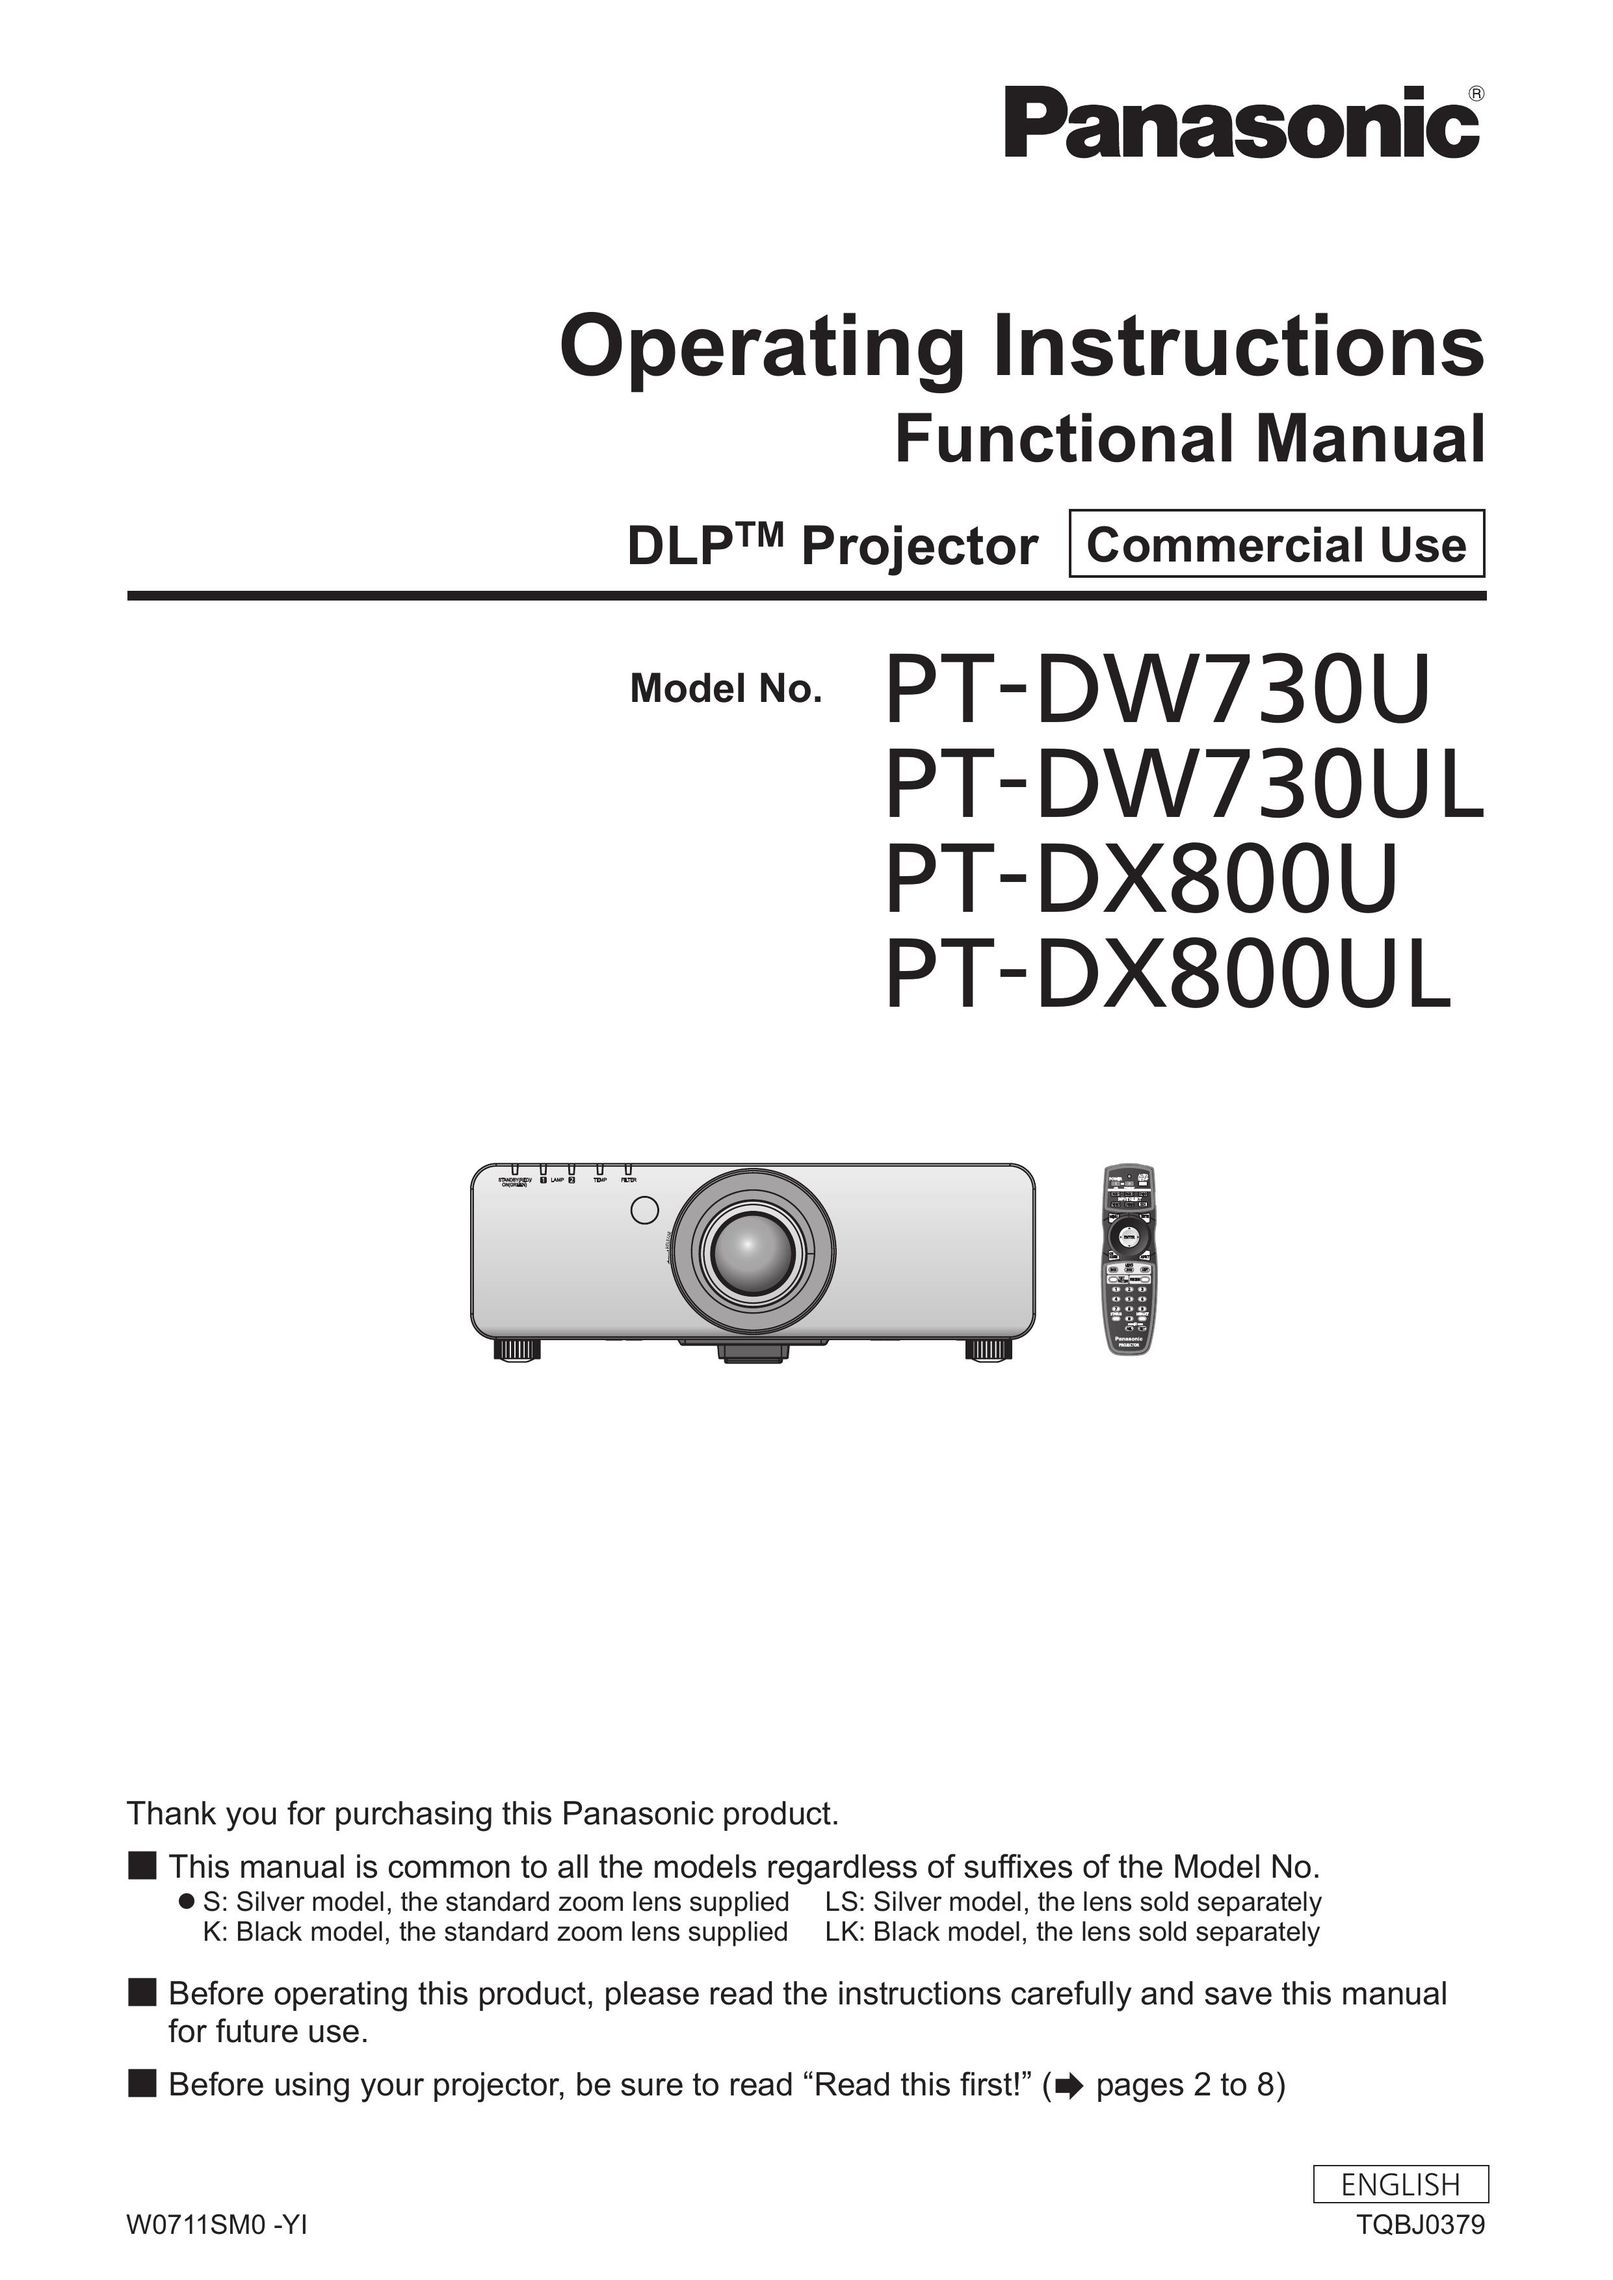 Panasonic PT-DW730UL Home Theater System User Manual